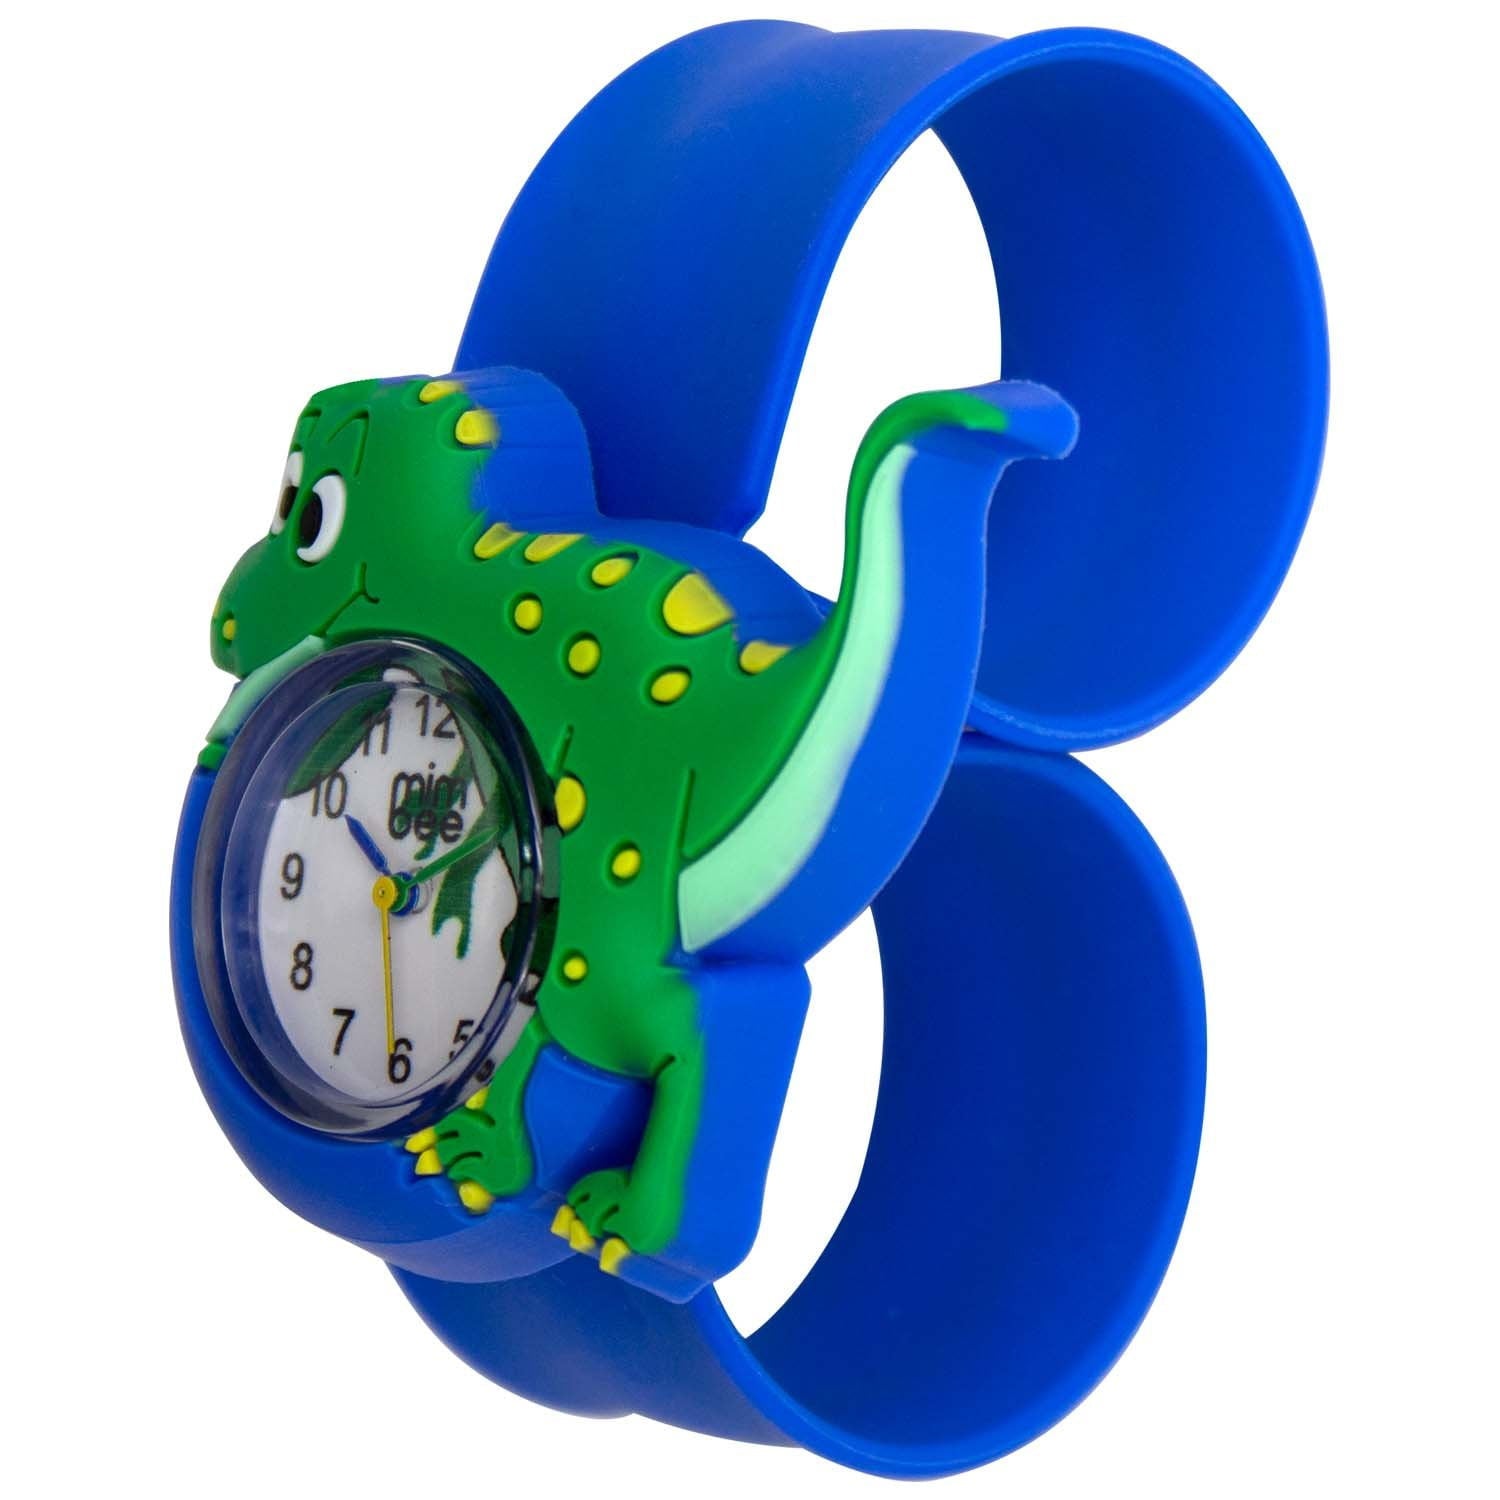 Mimbee - 3D Dino Snap Watch - Premium Snap Watches from Mimbee Kids - Just R 130! Shop now at Mimbee Kids